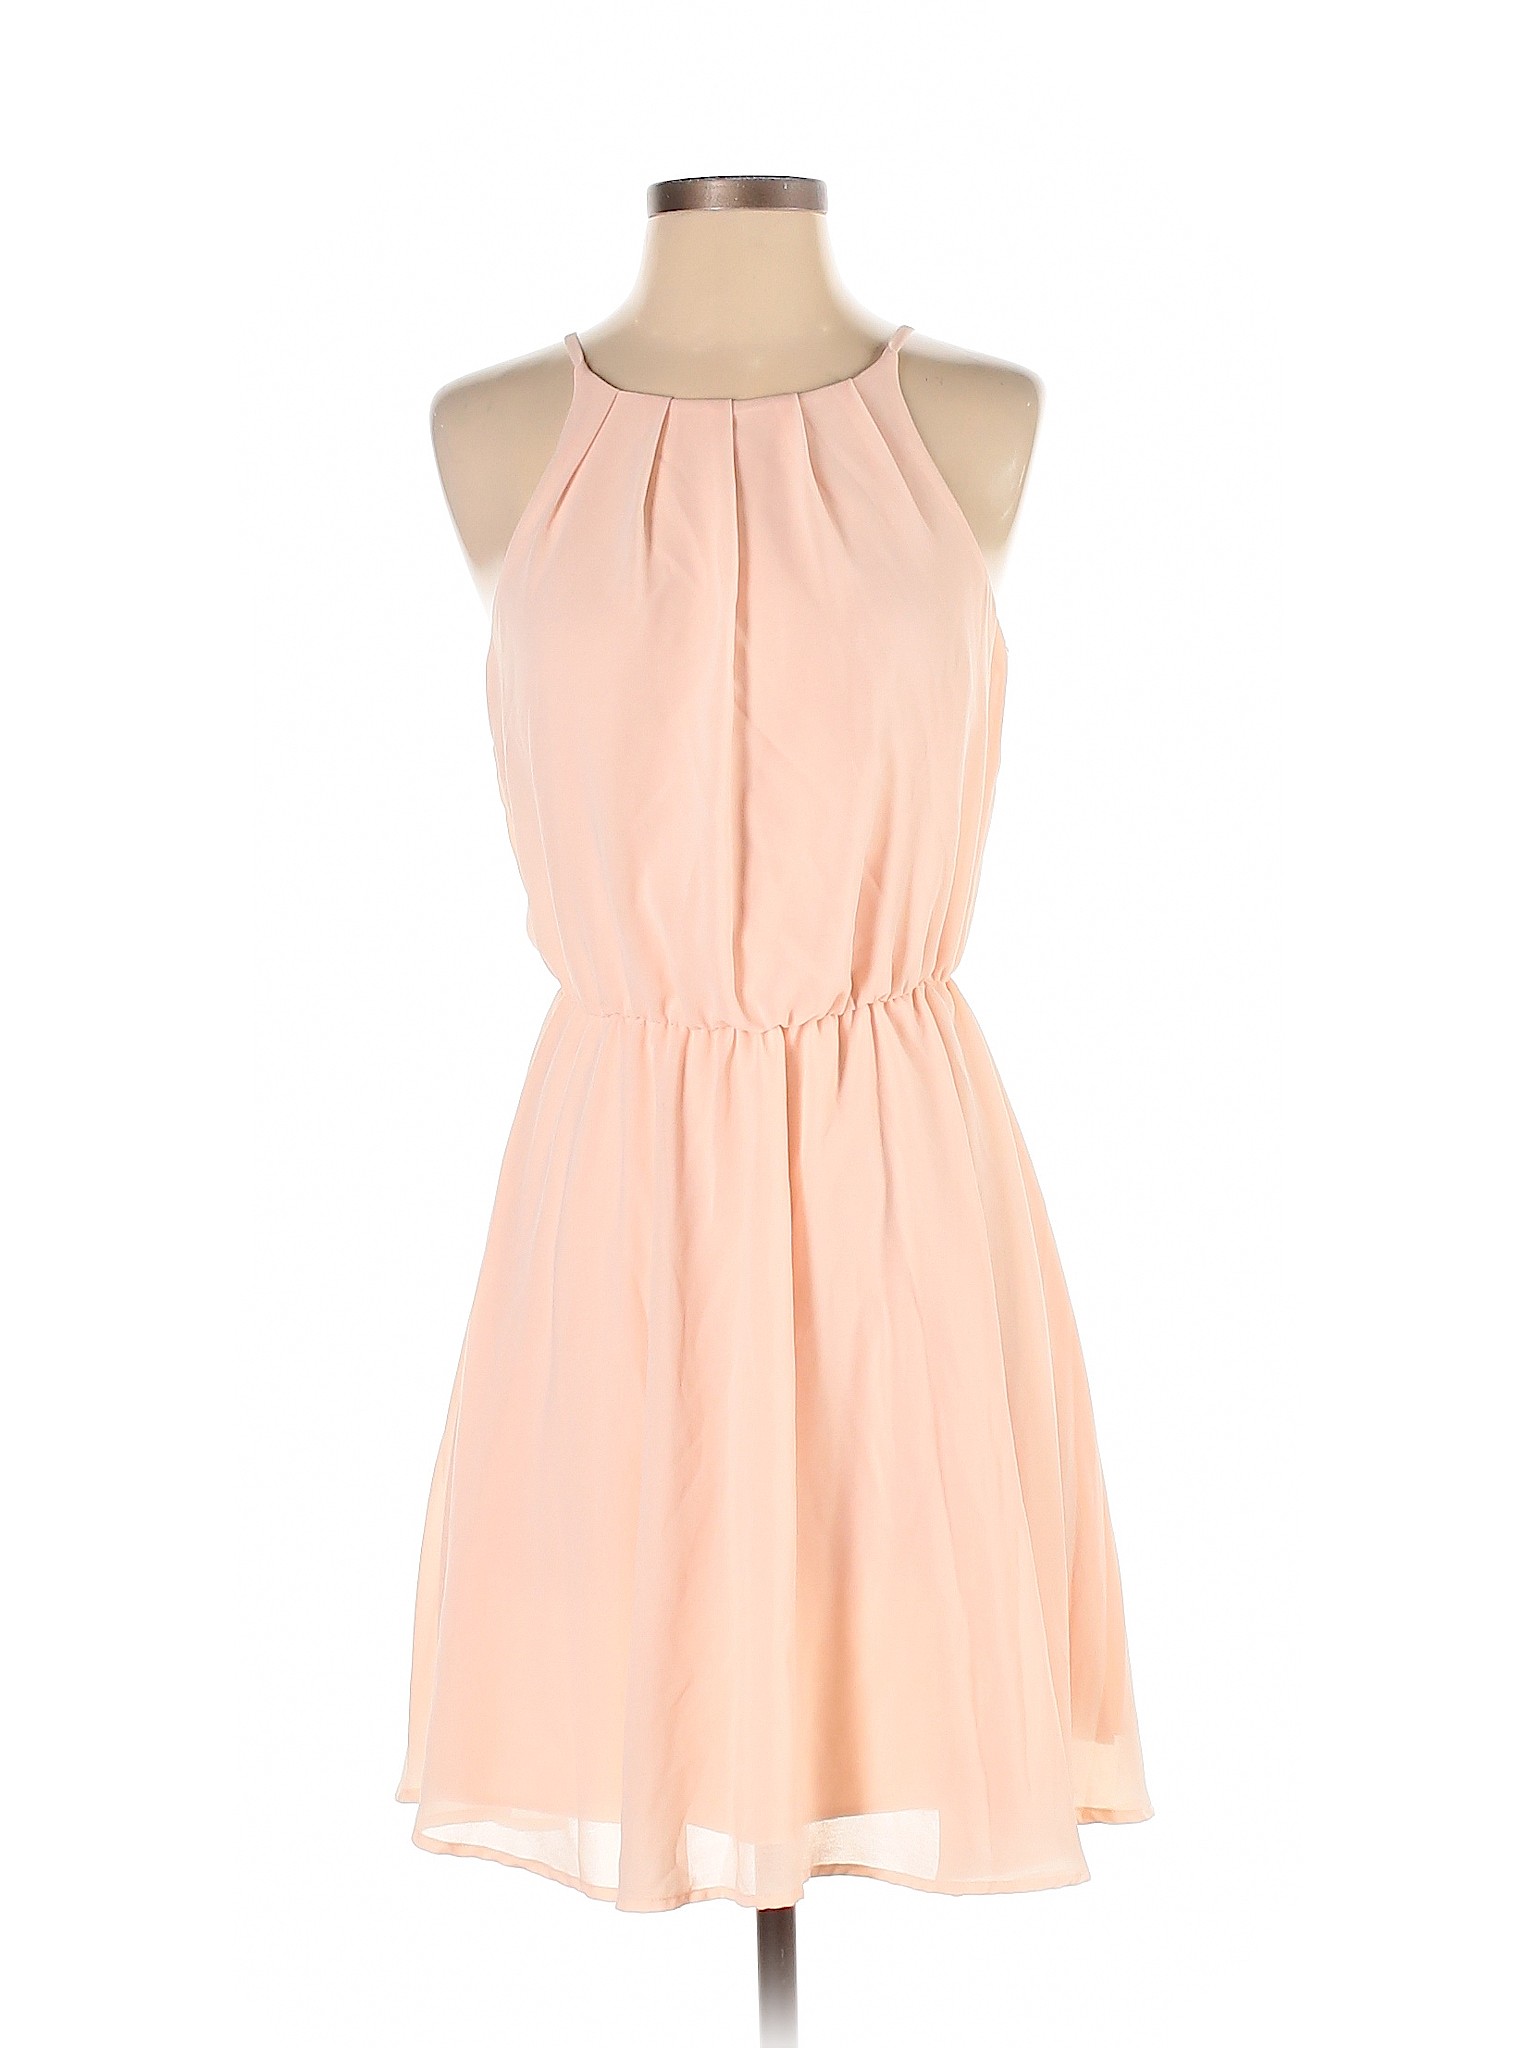 Mi ami Women Pink Casual Dress S | eBay